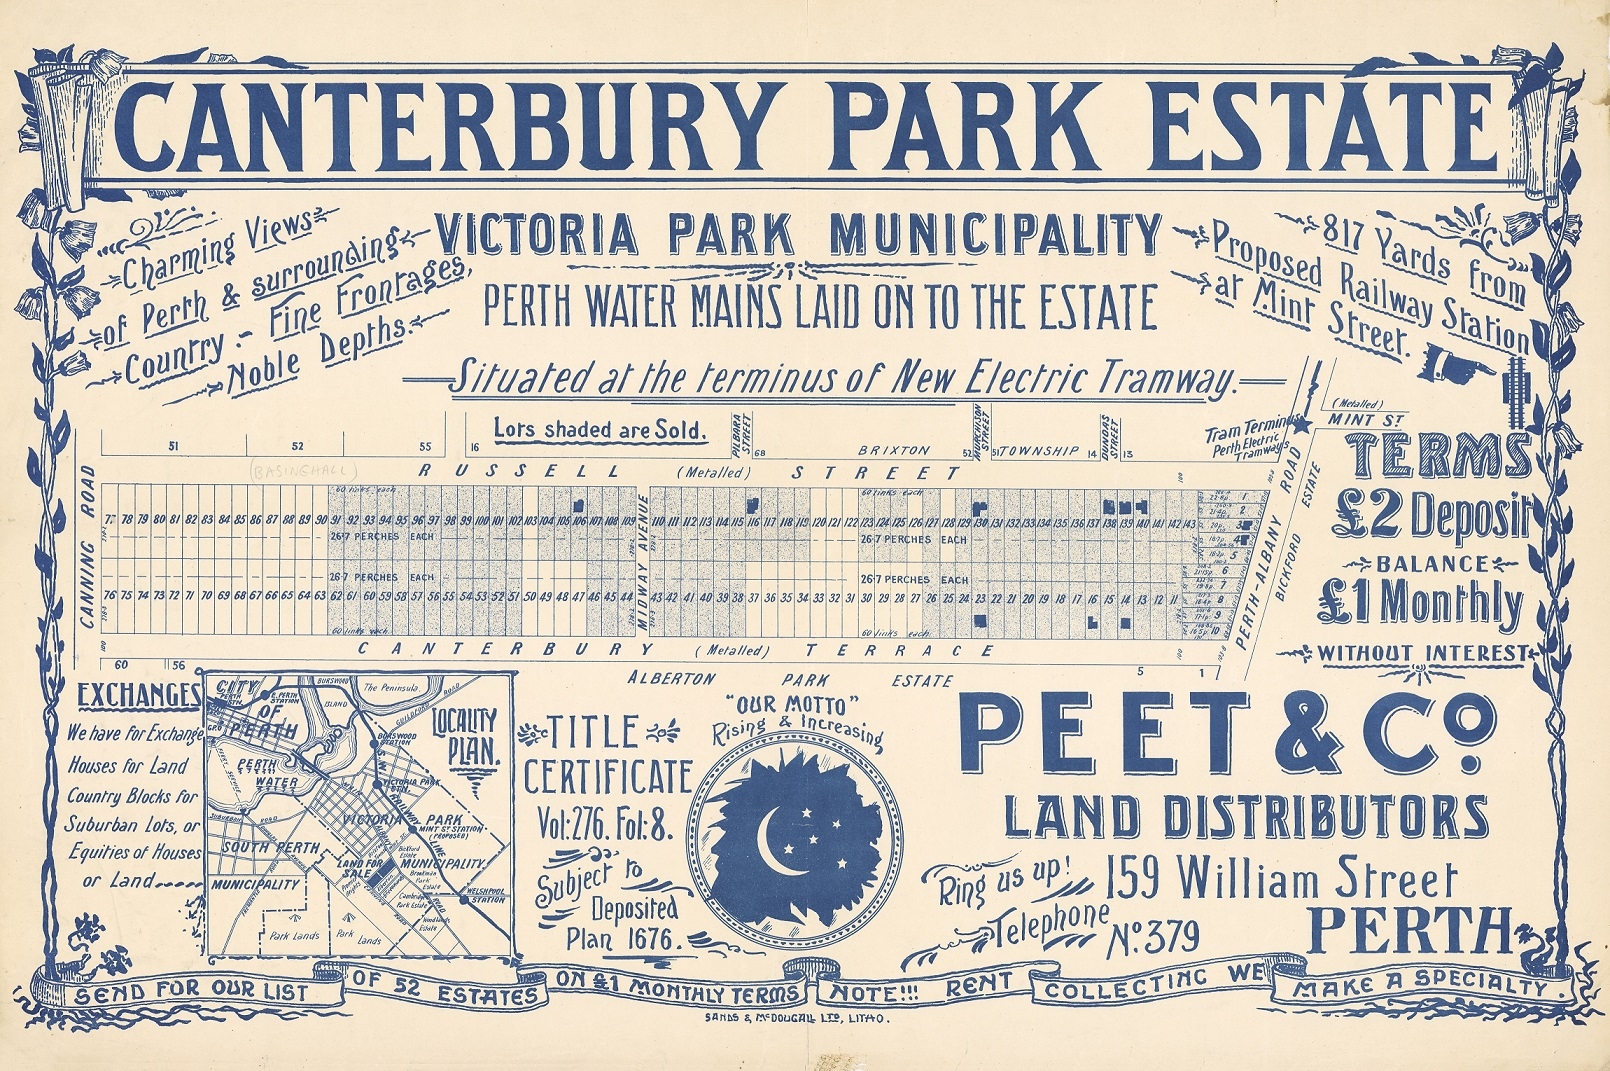 Canterbury Park Estate, Victoria Park Municipality [1905?] Image